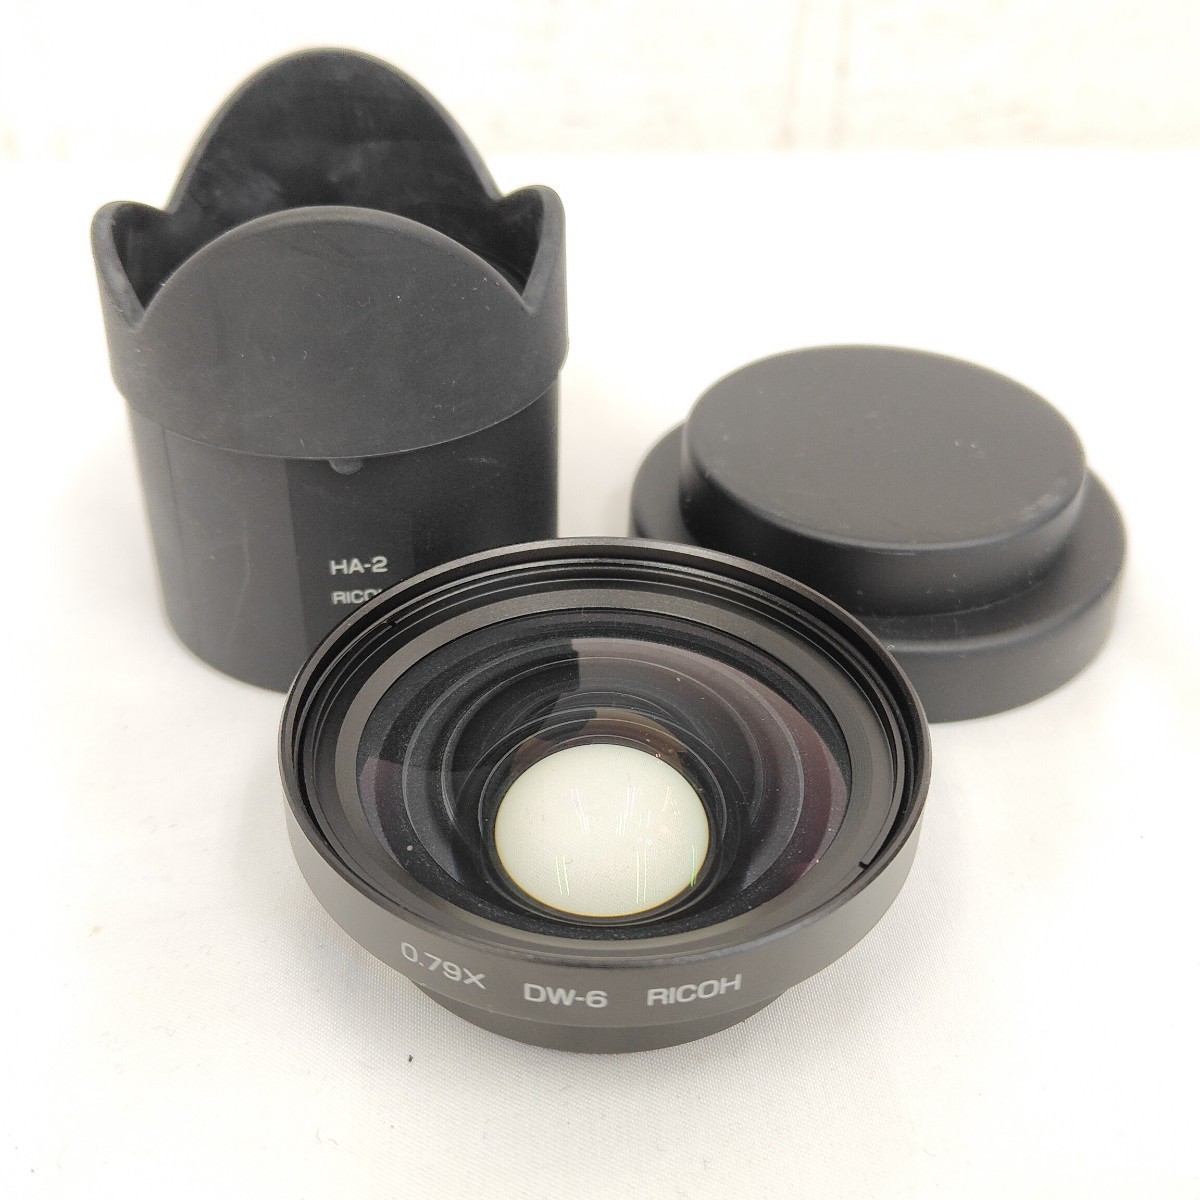 RICOH ワイドコンバージョンレンズ カメラレンズ 0.79× DW-6 リコー HA-2 カメラアクセサリー レンズ ワイド コンバージョン 巾着 SC_画像1